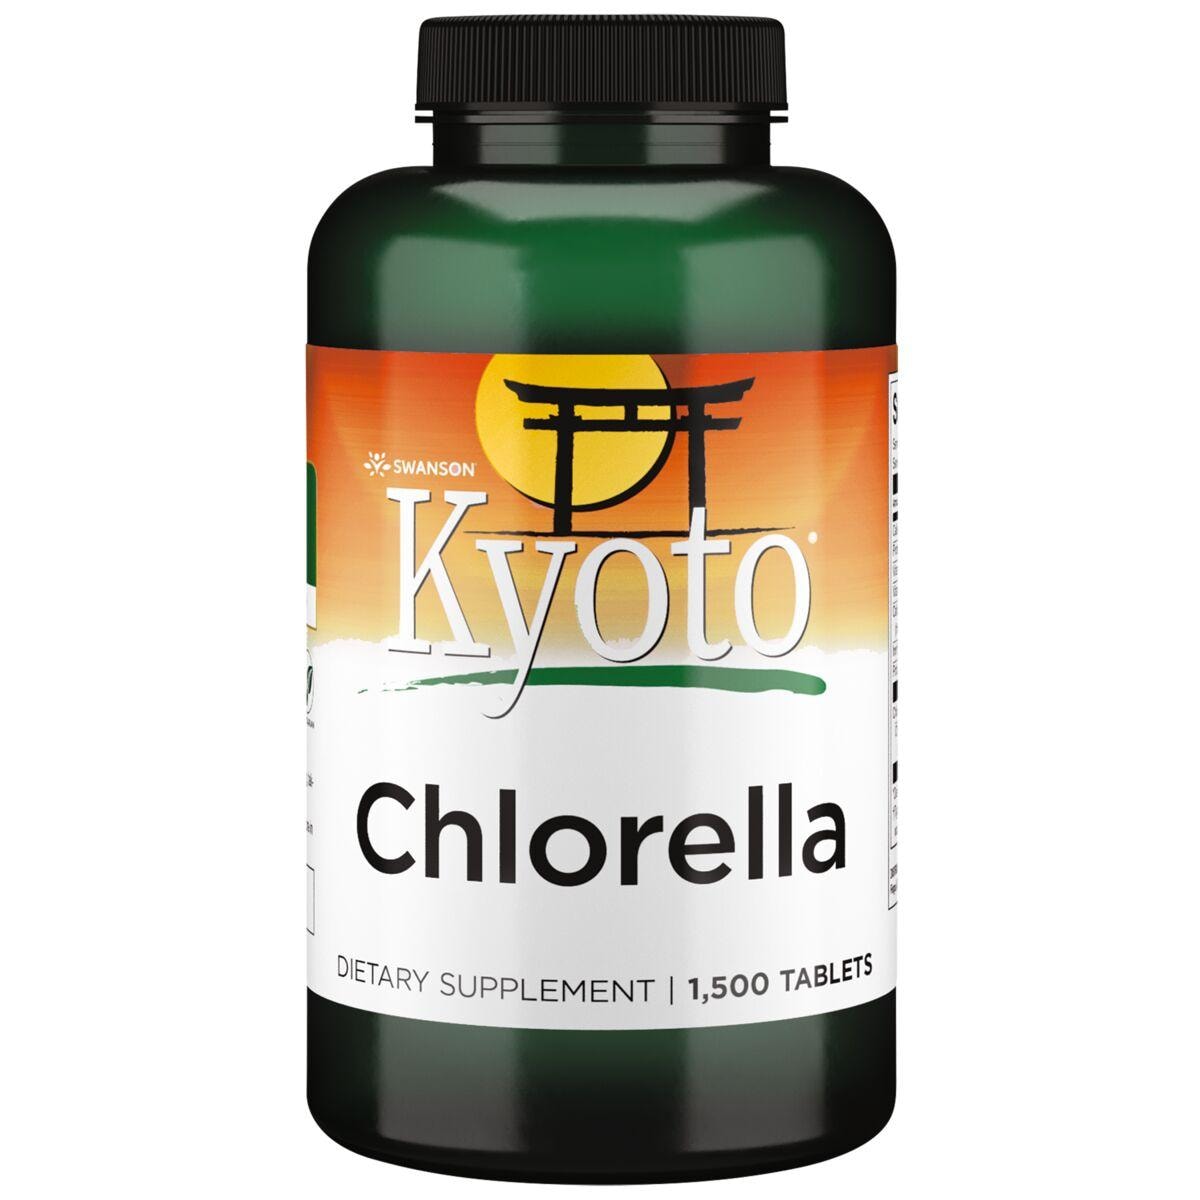 Swanson Kyoto Brand Chlorella Supplement Vitamin | 194 mg | 1500 Tabs